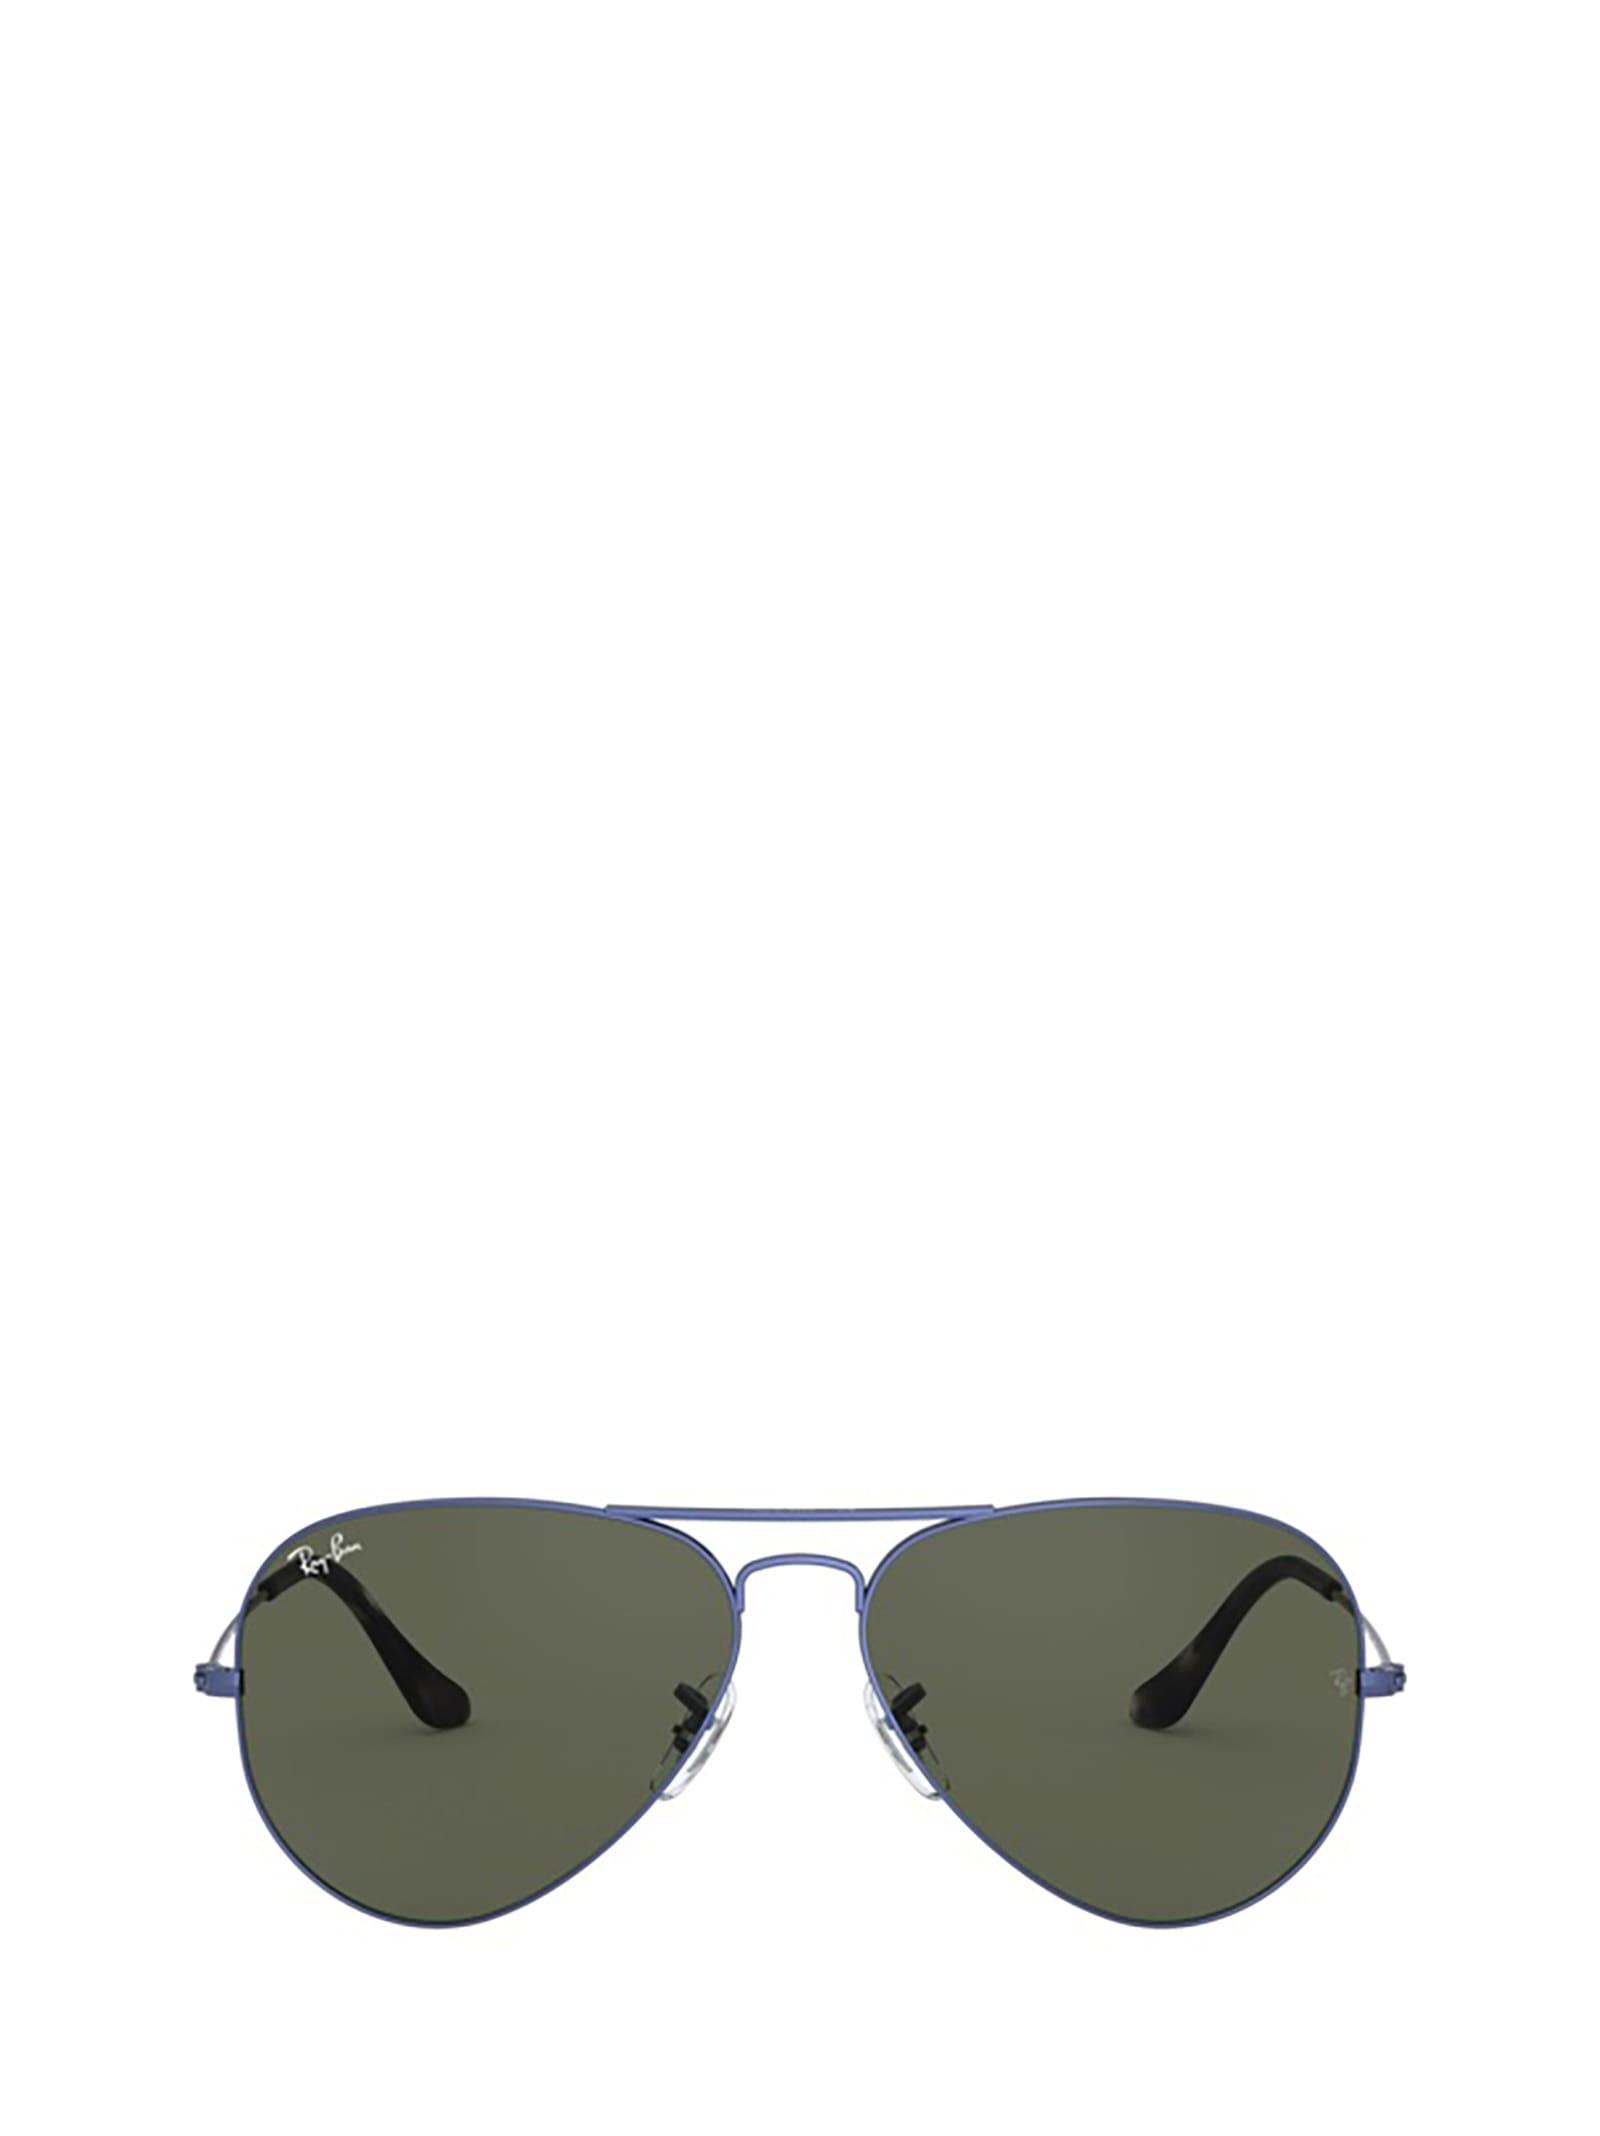 Ray-Ban Ray-ban Rb3025 Sand Transparent Blue Sunglasses